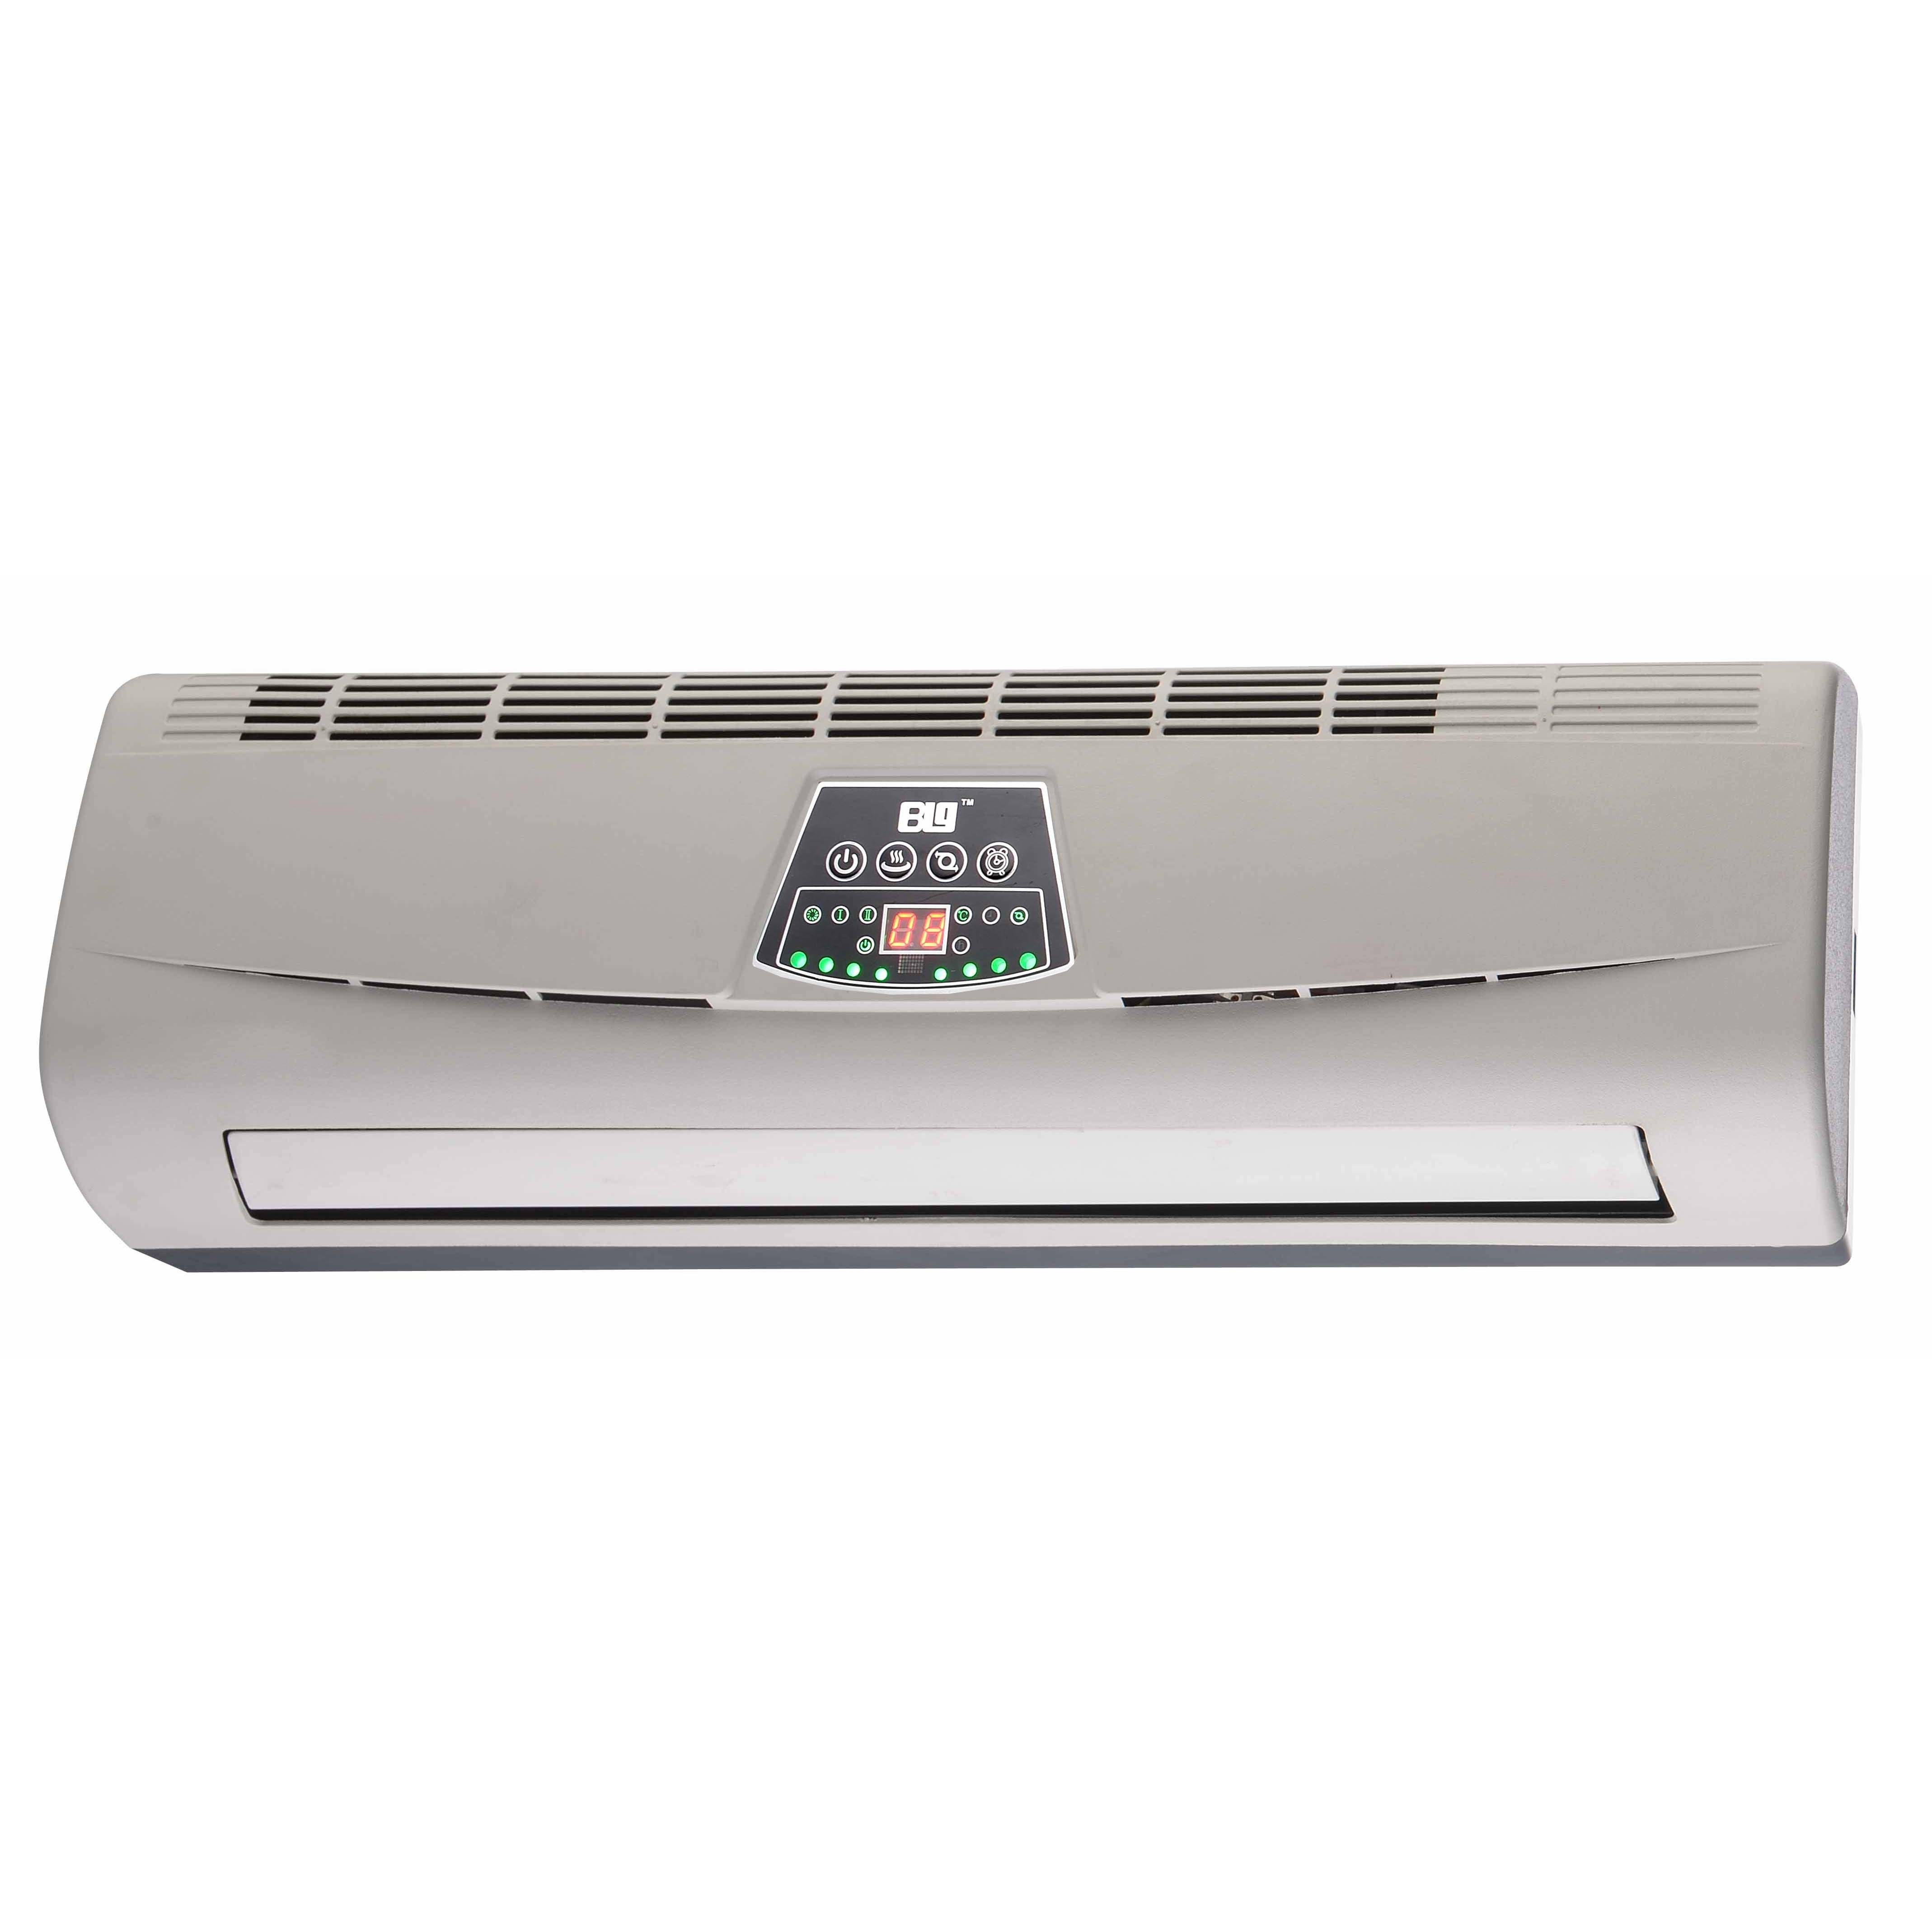 2015 Hot Sale Electric Wall Heater (GF-5806L)